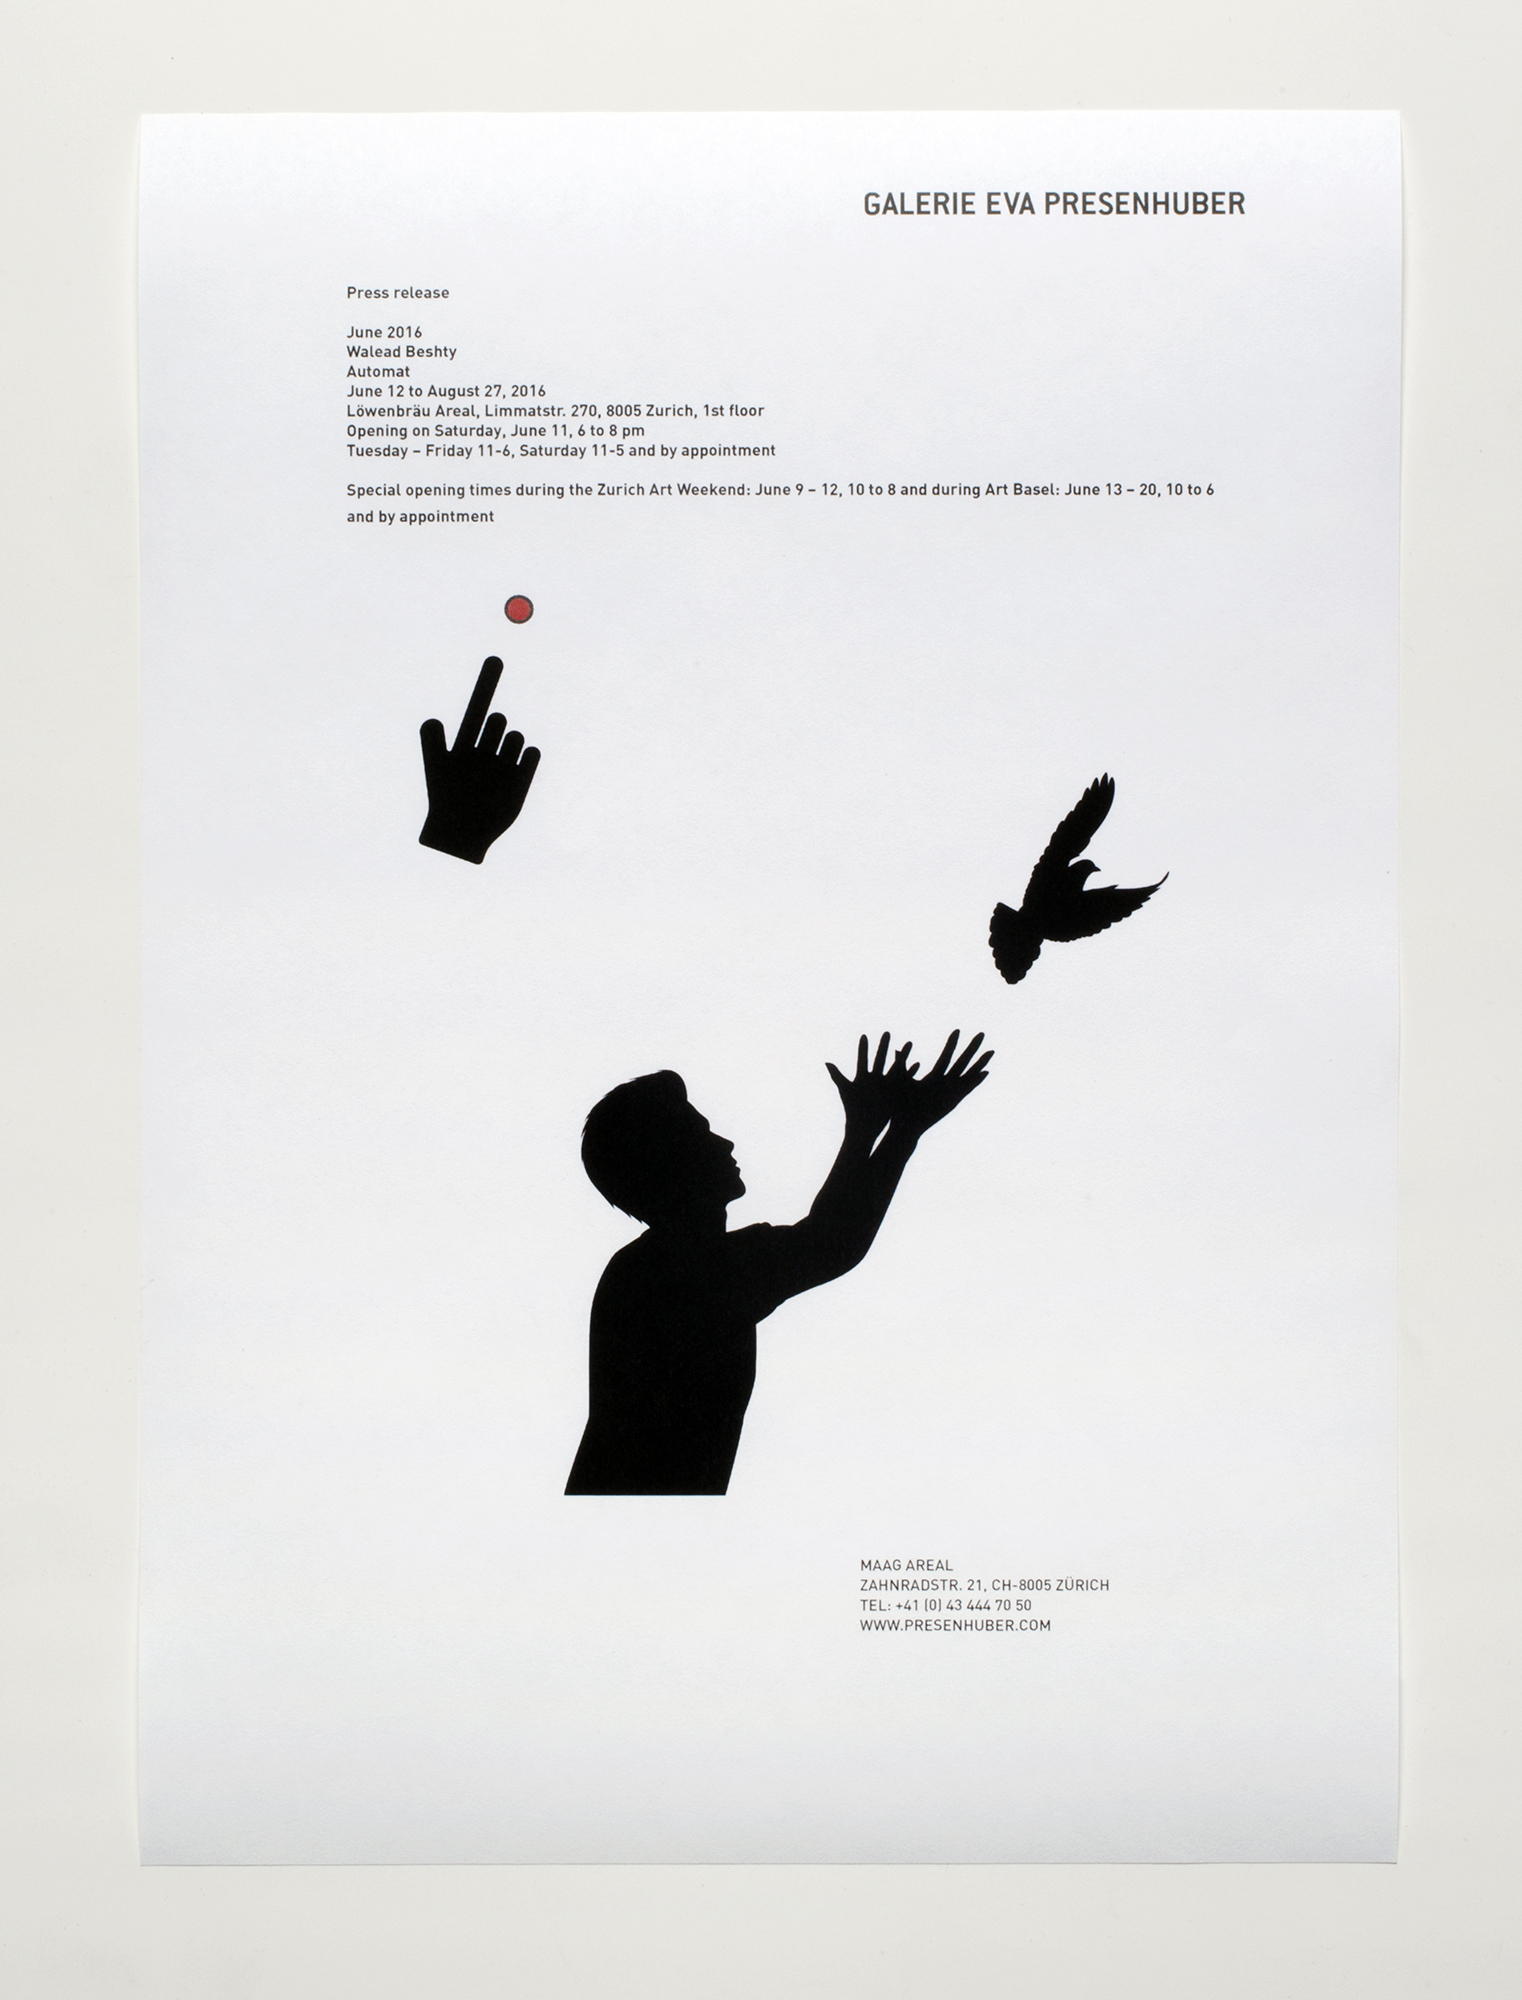   Automat  press release  Galerie Eva Presenhuber, Zurich  2016 